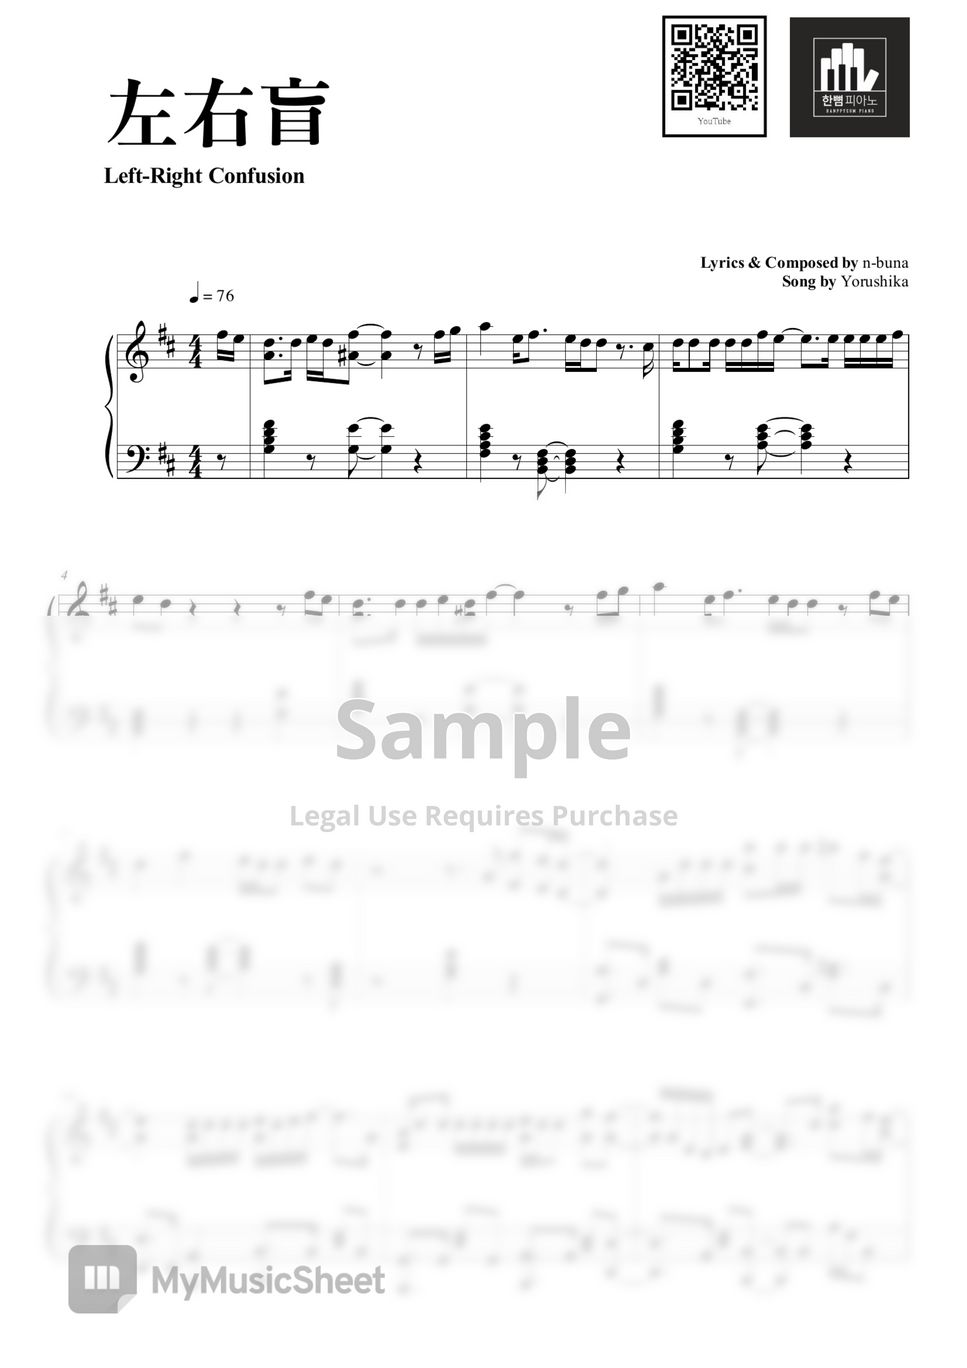 Yorushika - Left-Right Confusion (PIANO COVER) by HANPPYEOMPIANO